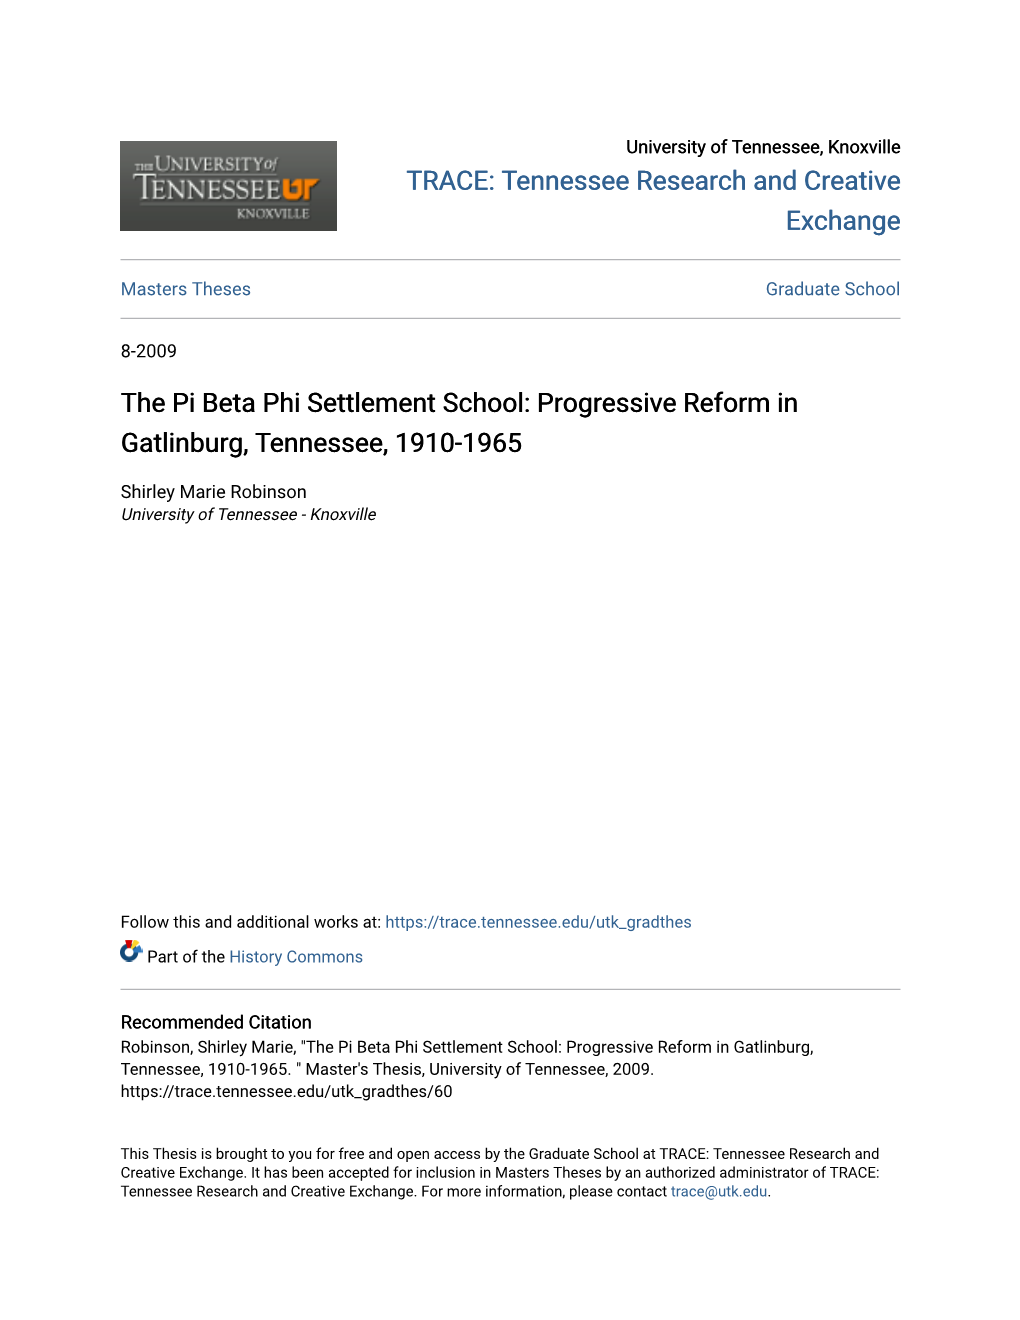 The Pi Beta Phi Settlement School: Progressive Reform in Gatlinburg, Tennessee, 1910-1965